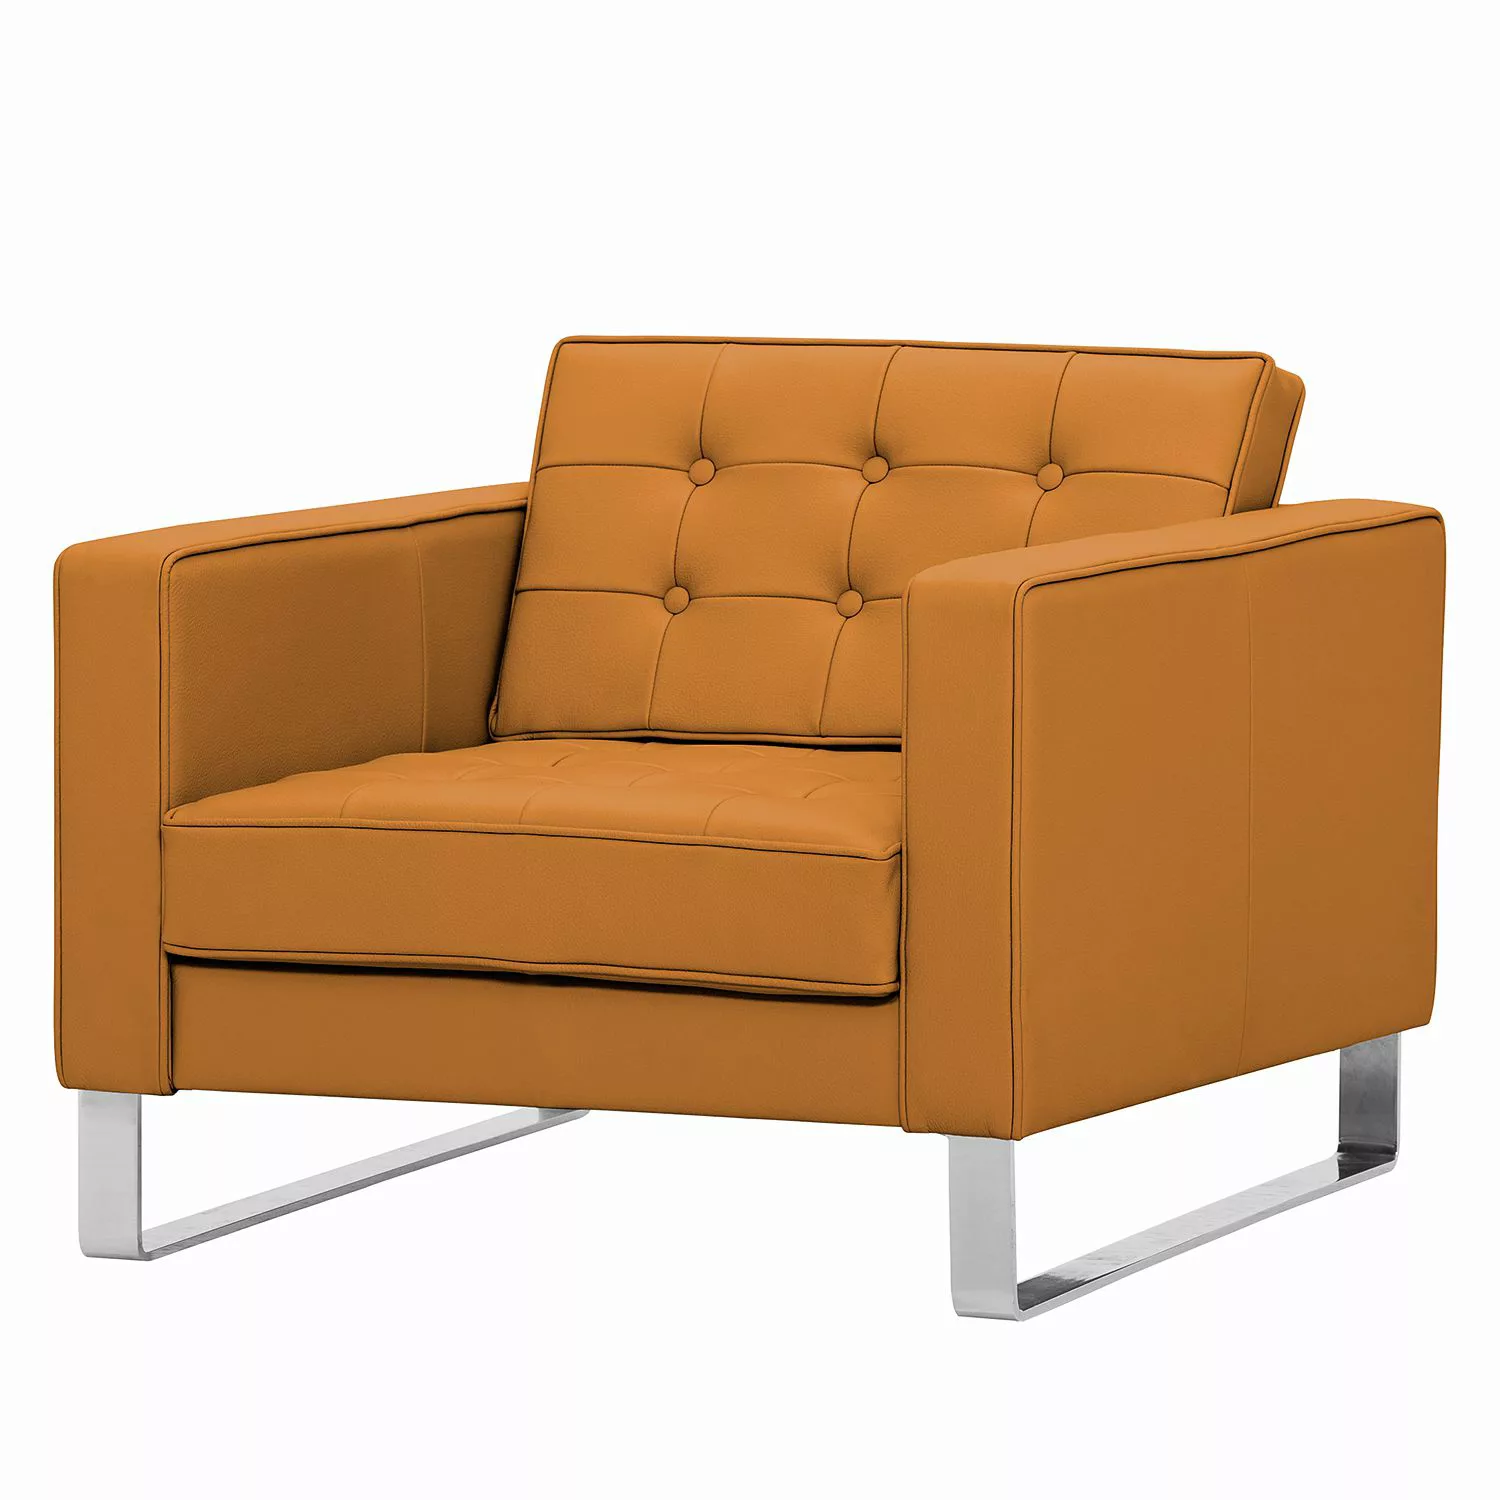 home24 Fredriks Sessel Chelsea Cognac Echtleder 82x68x85 cm (BxHxT) günstig online kaufen